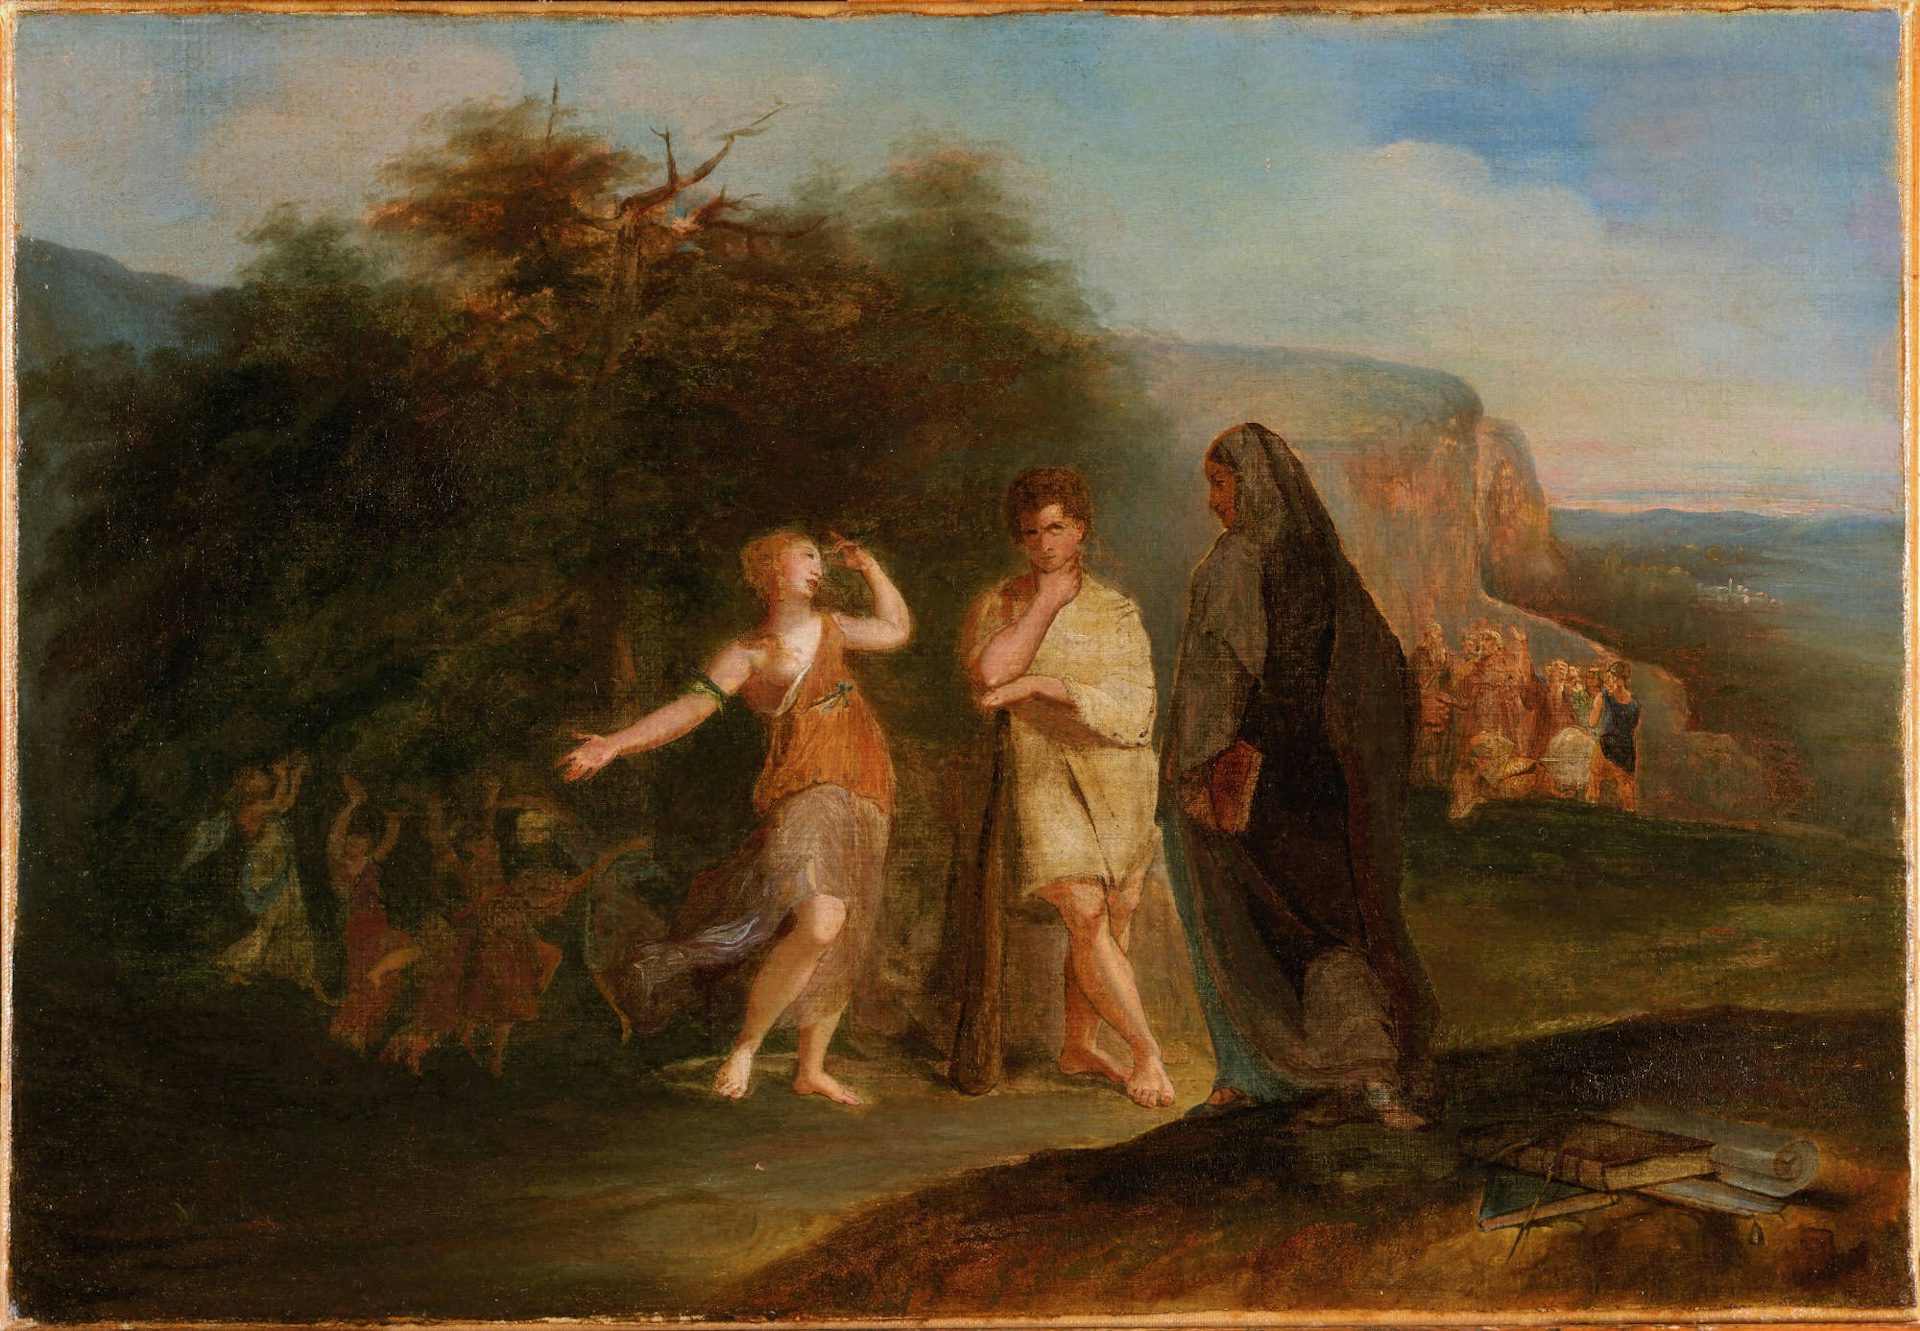 Choice of Hercules by Thomas Sully, 1819